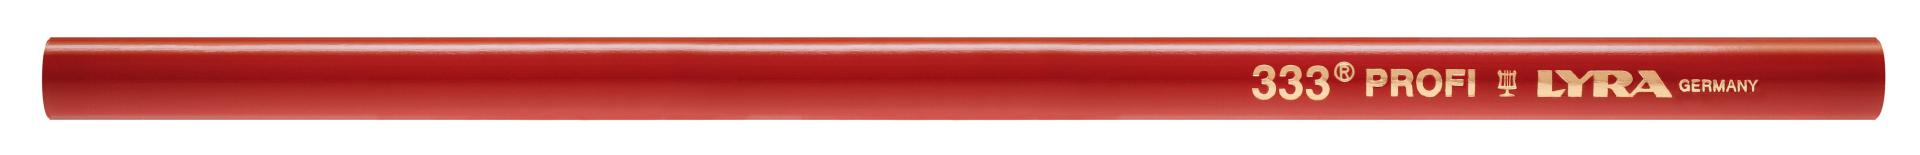 crayon-charpentier-rouge-100-bte-4333103-omyacolor-0